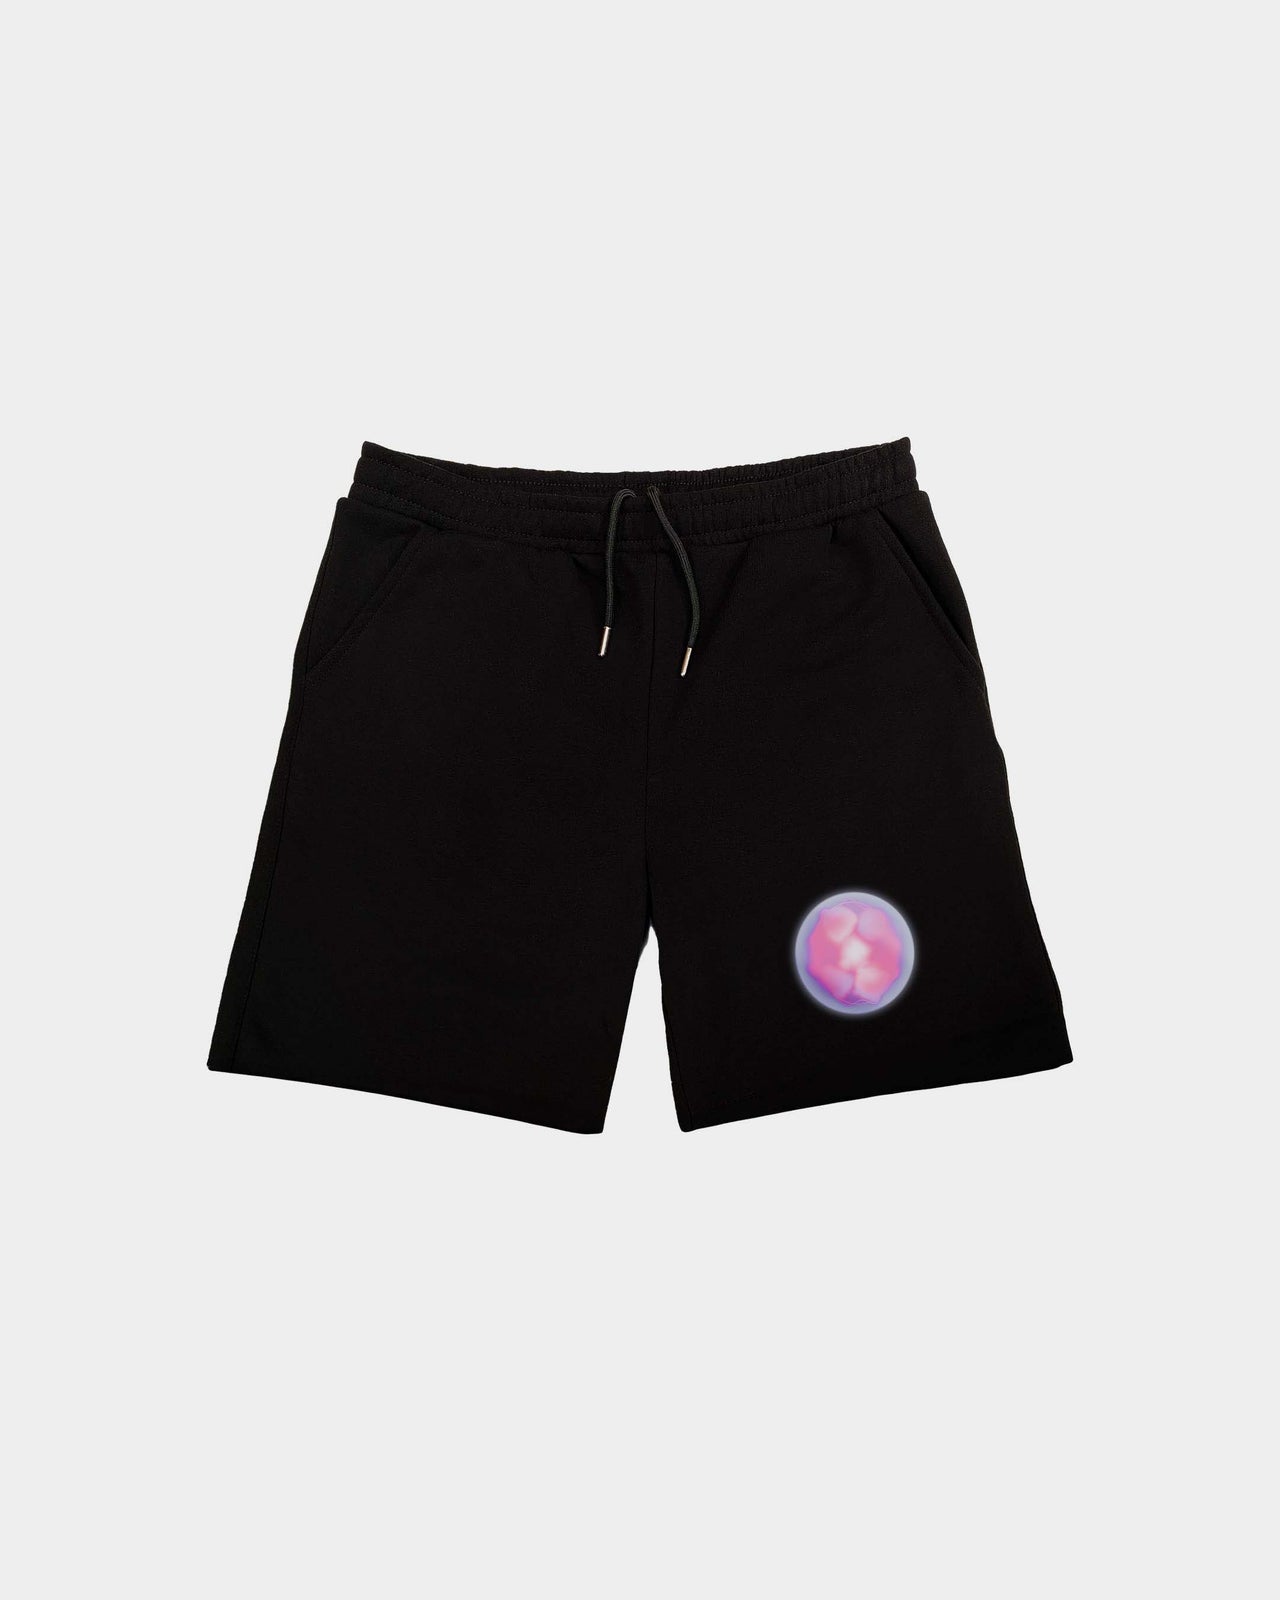 Orb of Love Men's Shorts